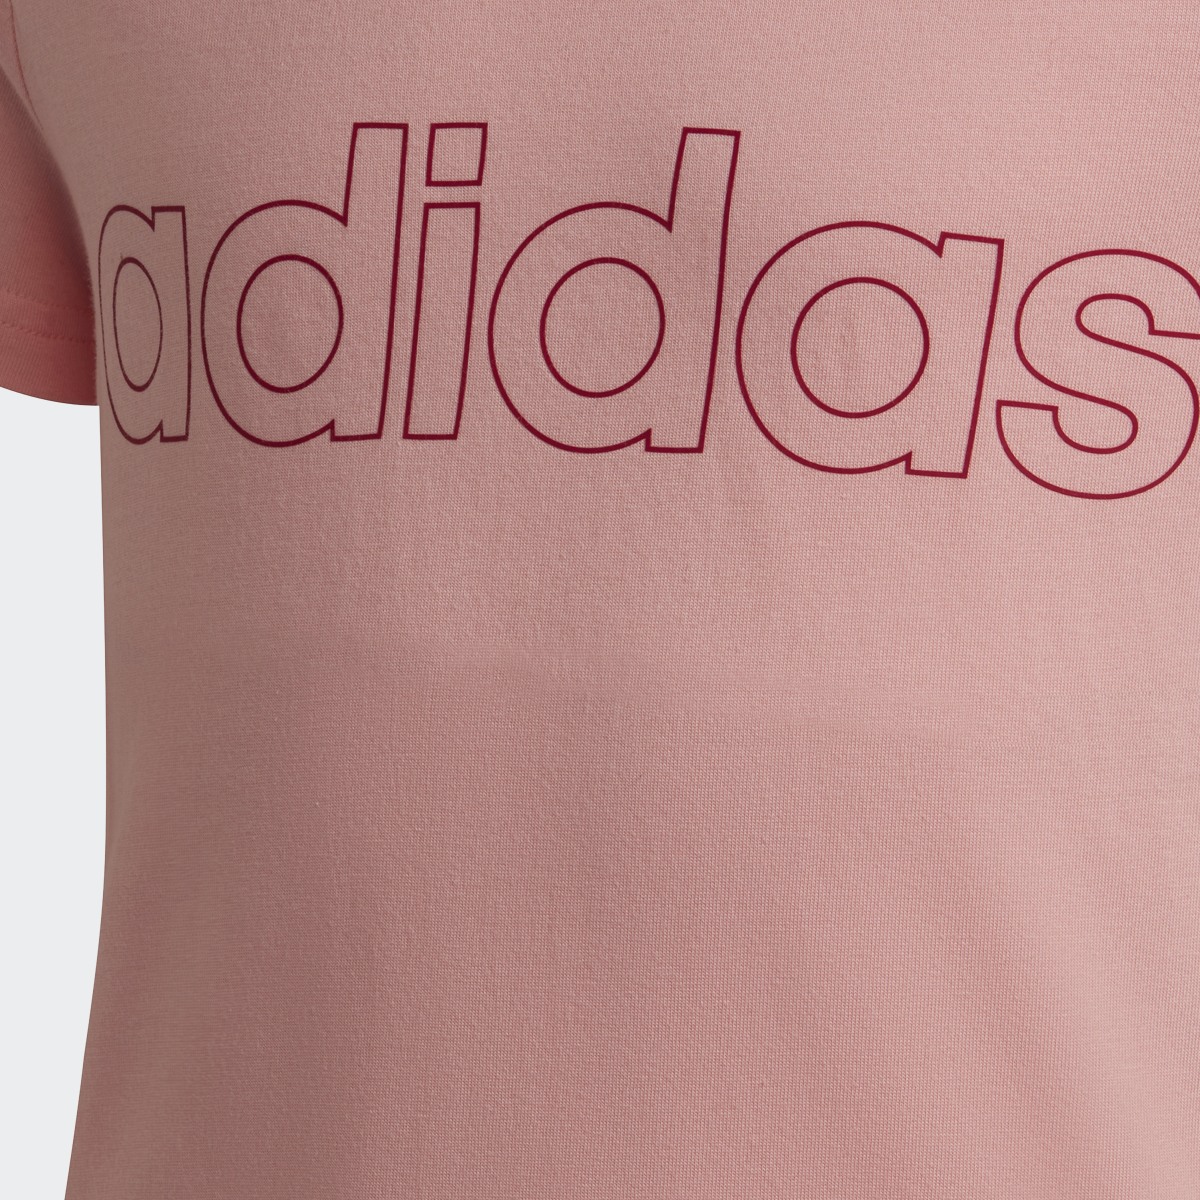 Adidas Essentials T-Shirt. 5